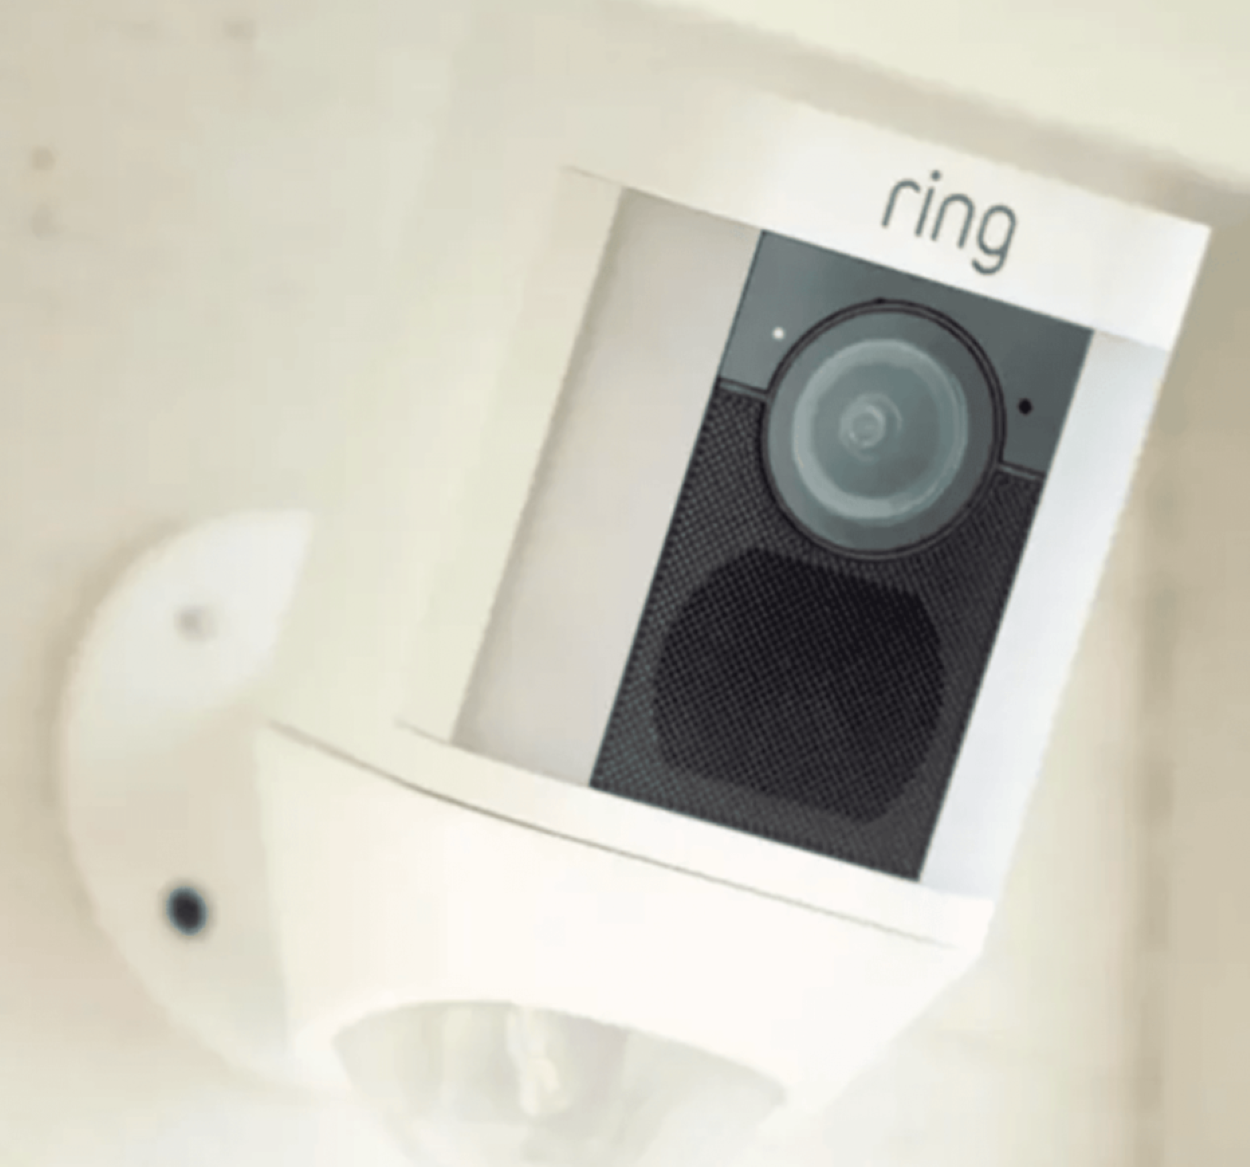 Ring security camera